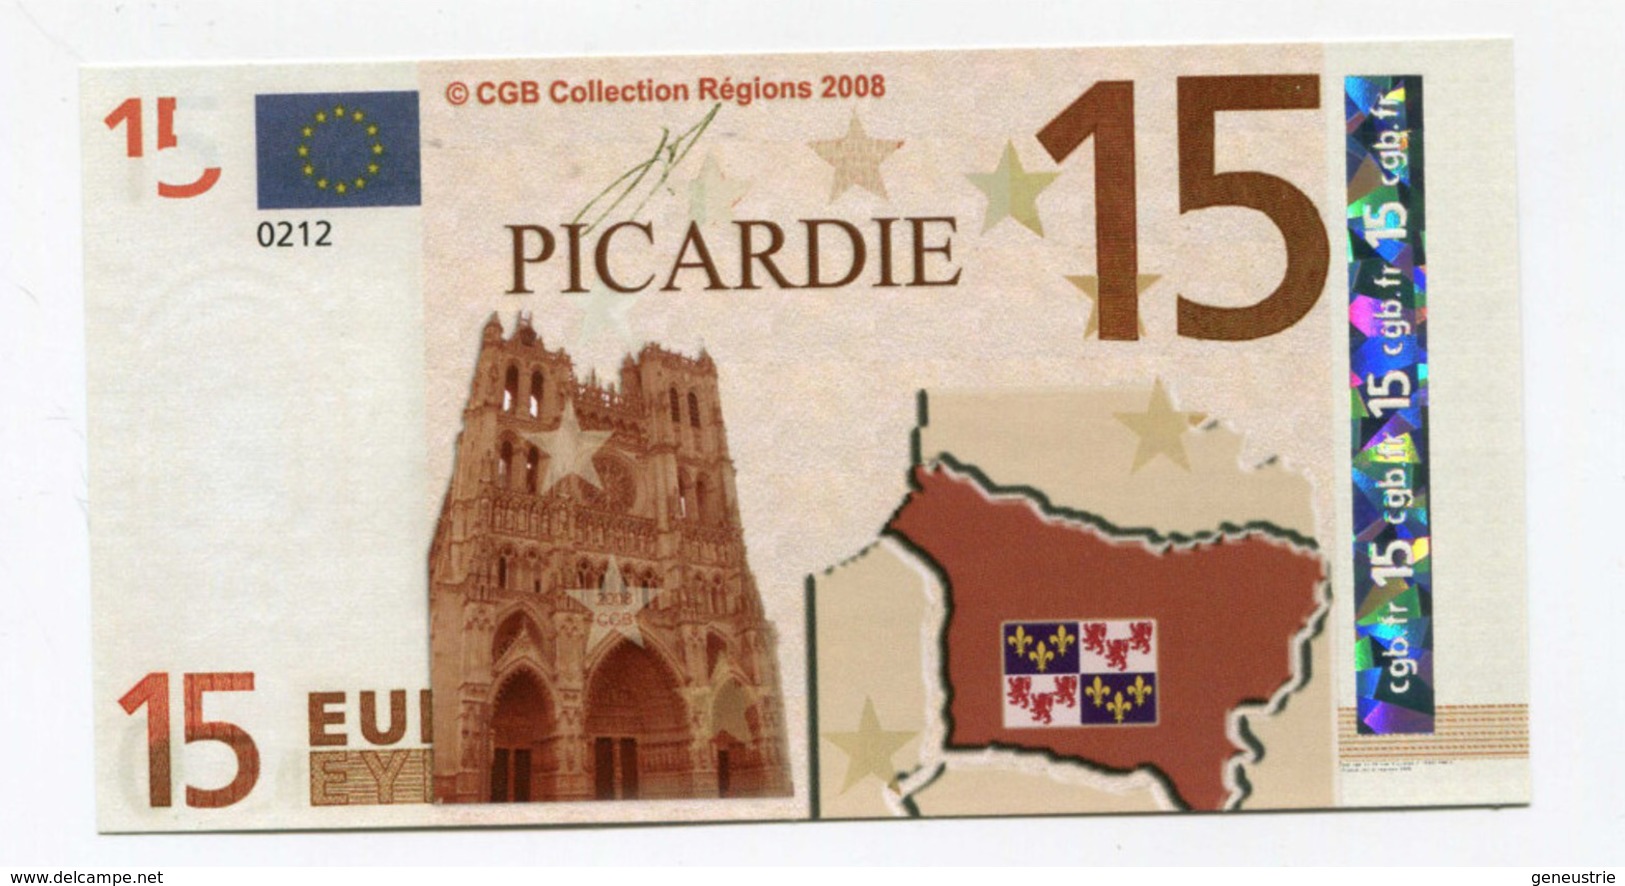 Billet De Banque "15 Euros / Picardie" 2008 - CGB - Billet Fictif De Fantaisie 15€ - Banknote - Prove Private